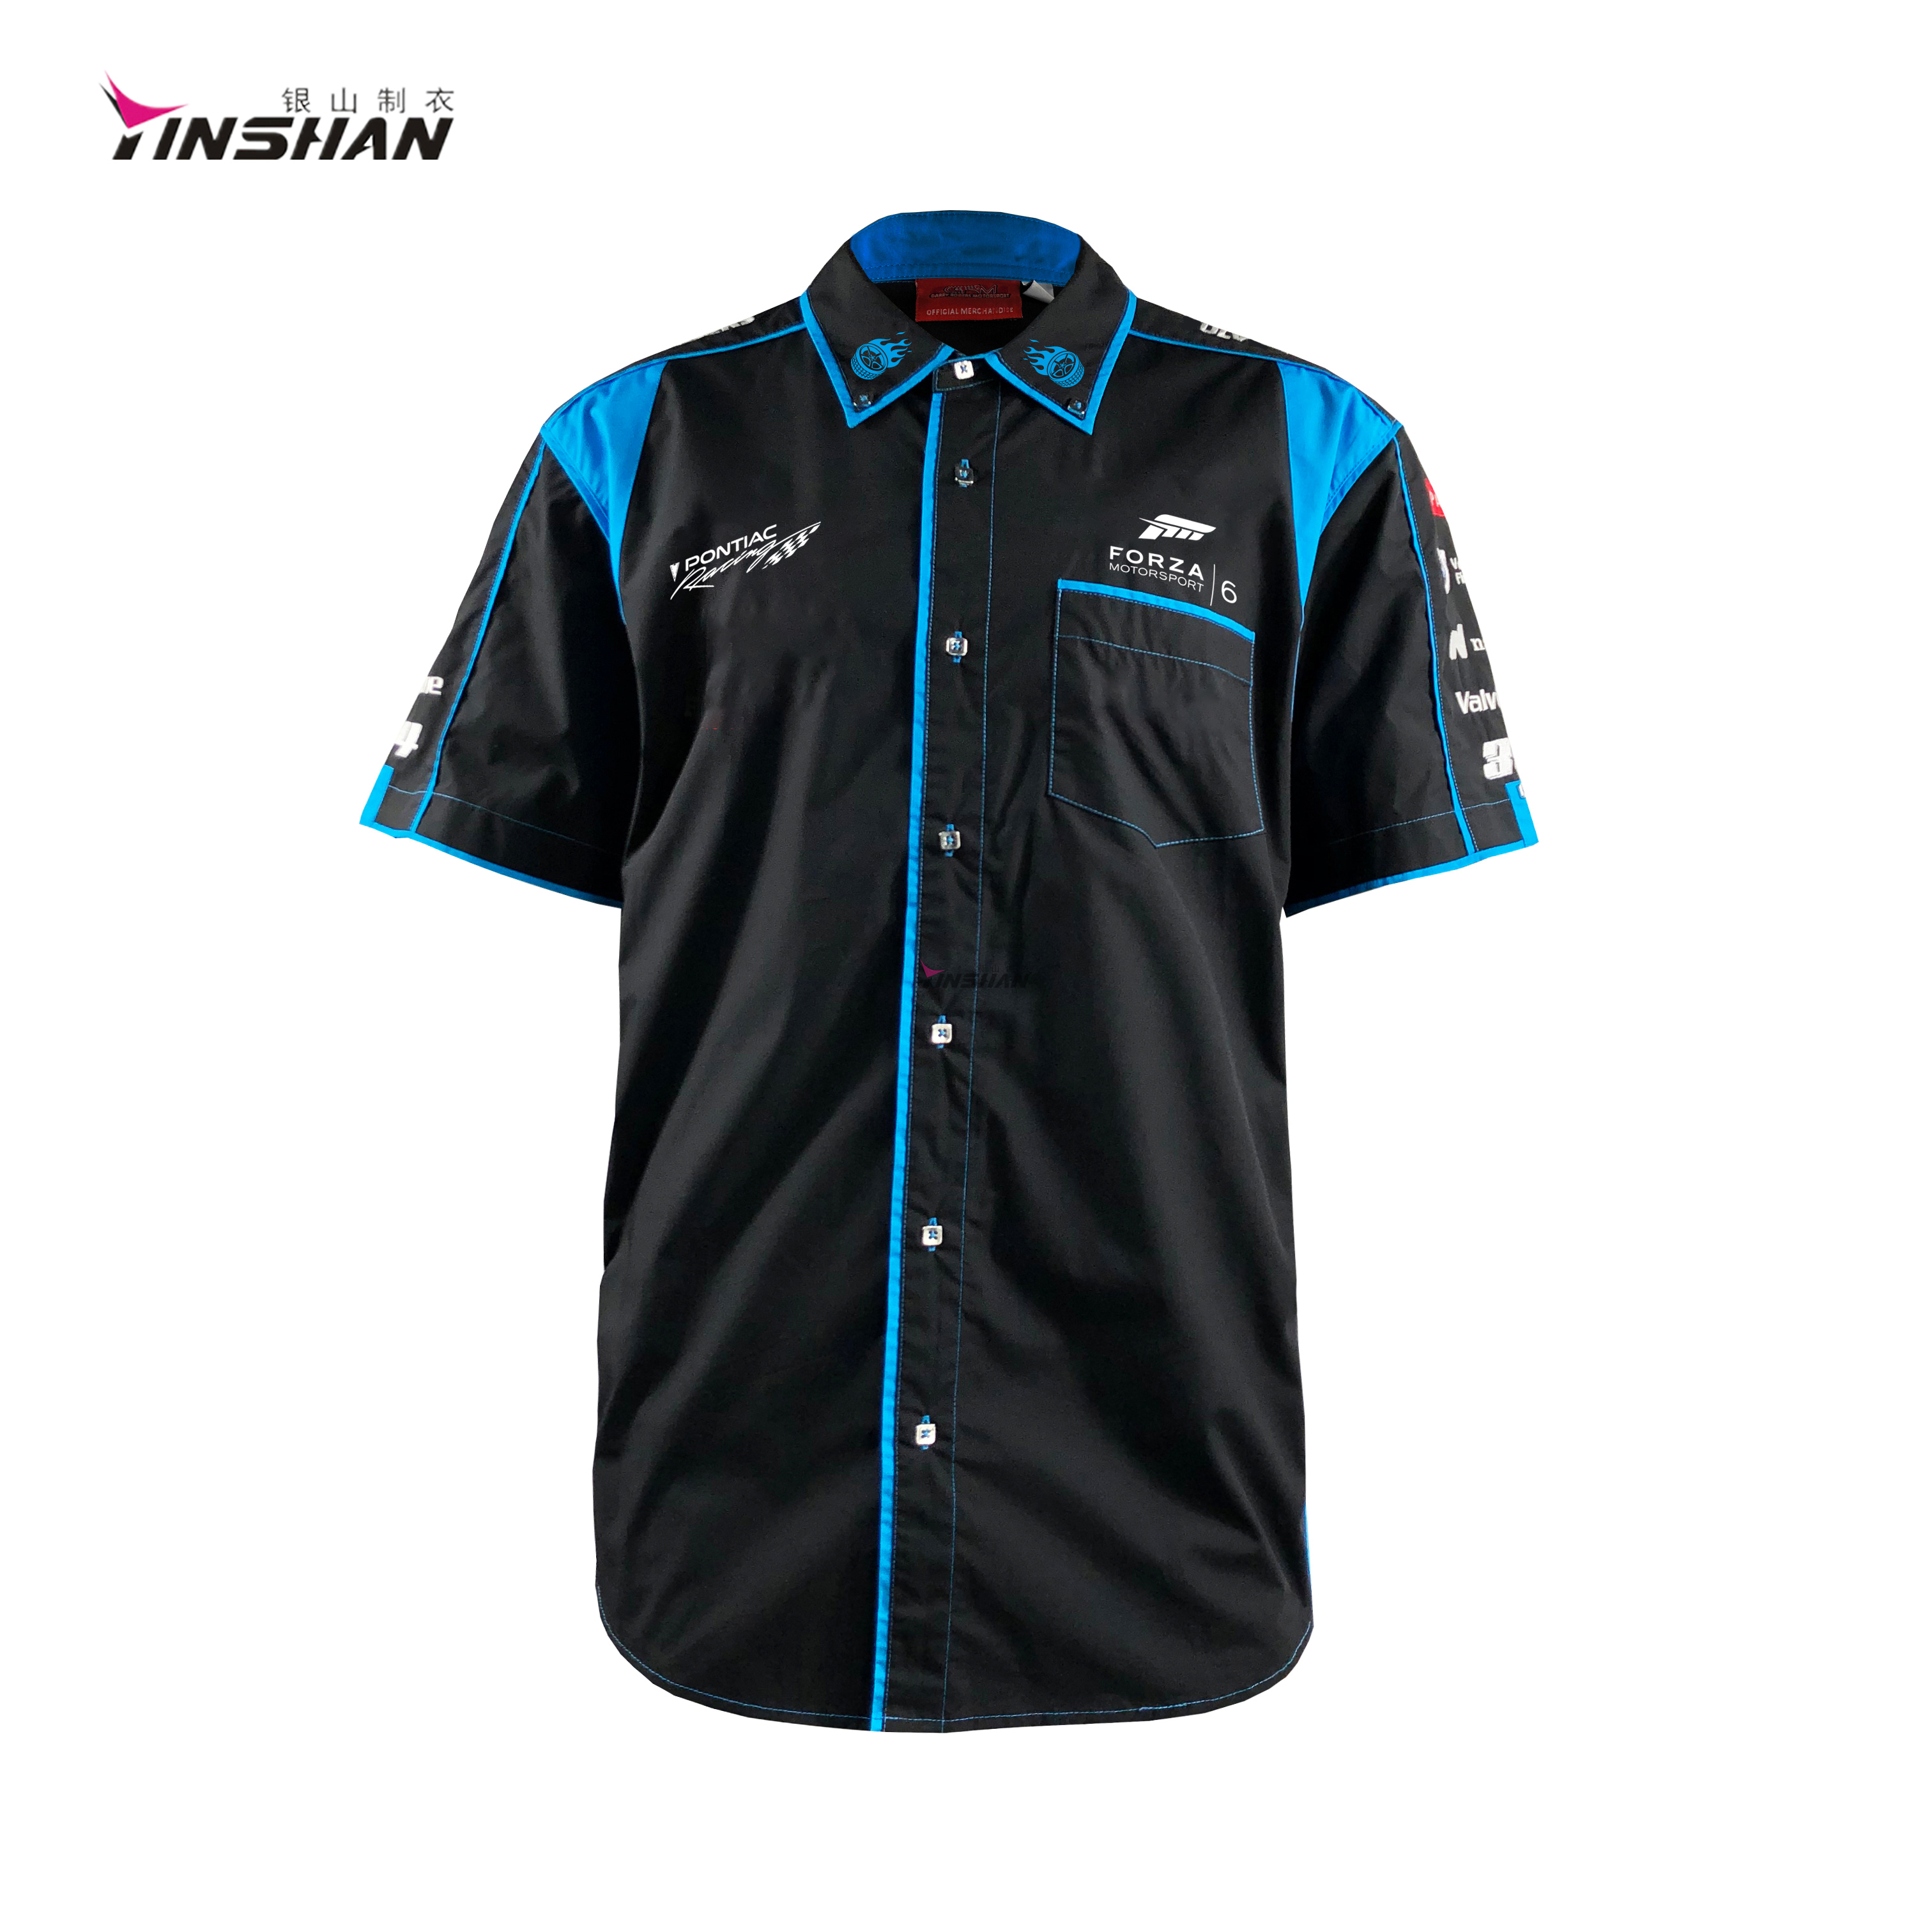 LOGO customized wear-resistant racing short-sleeved shirt